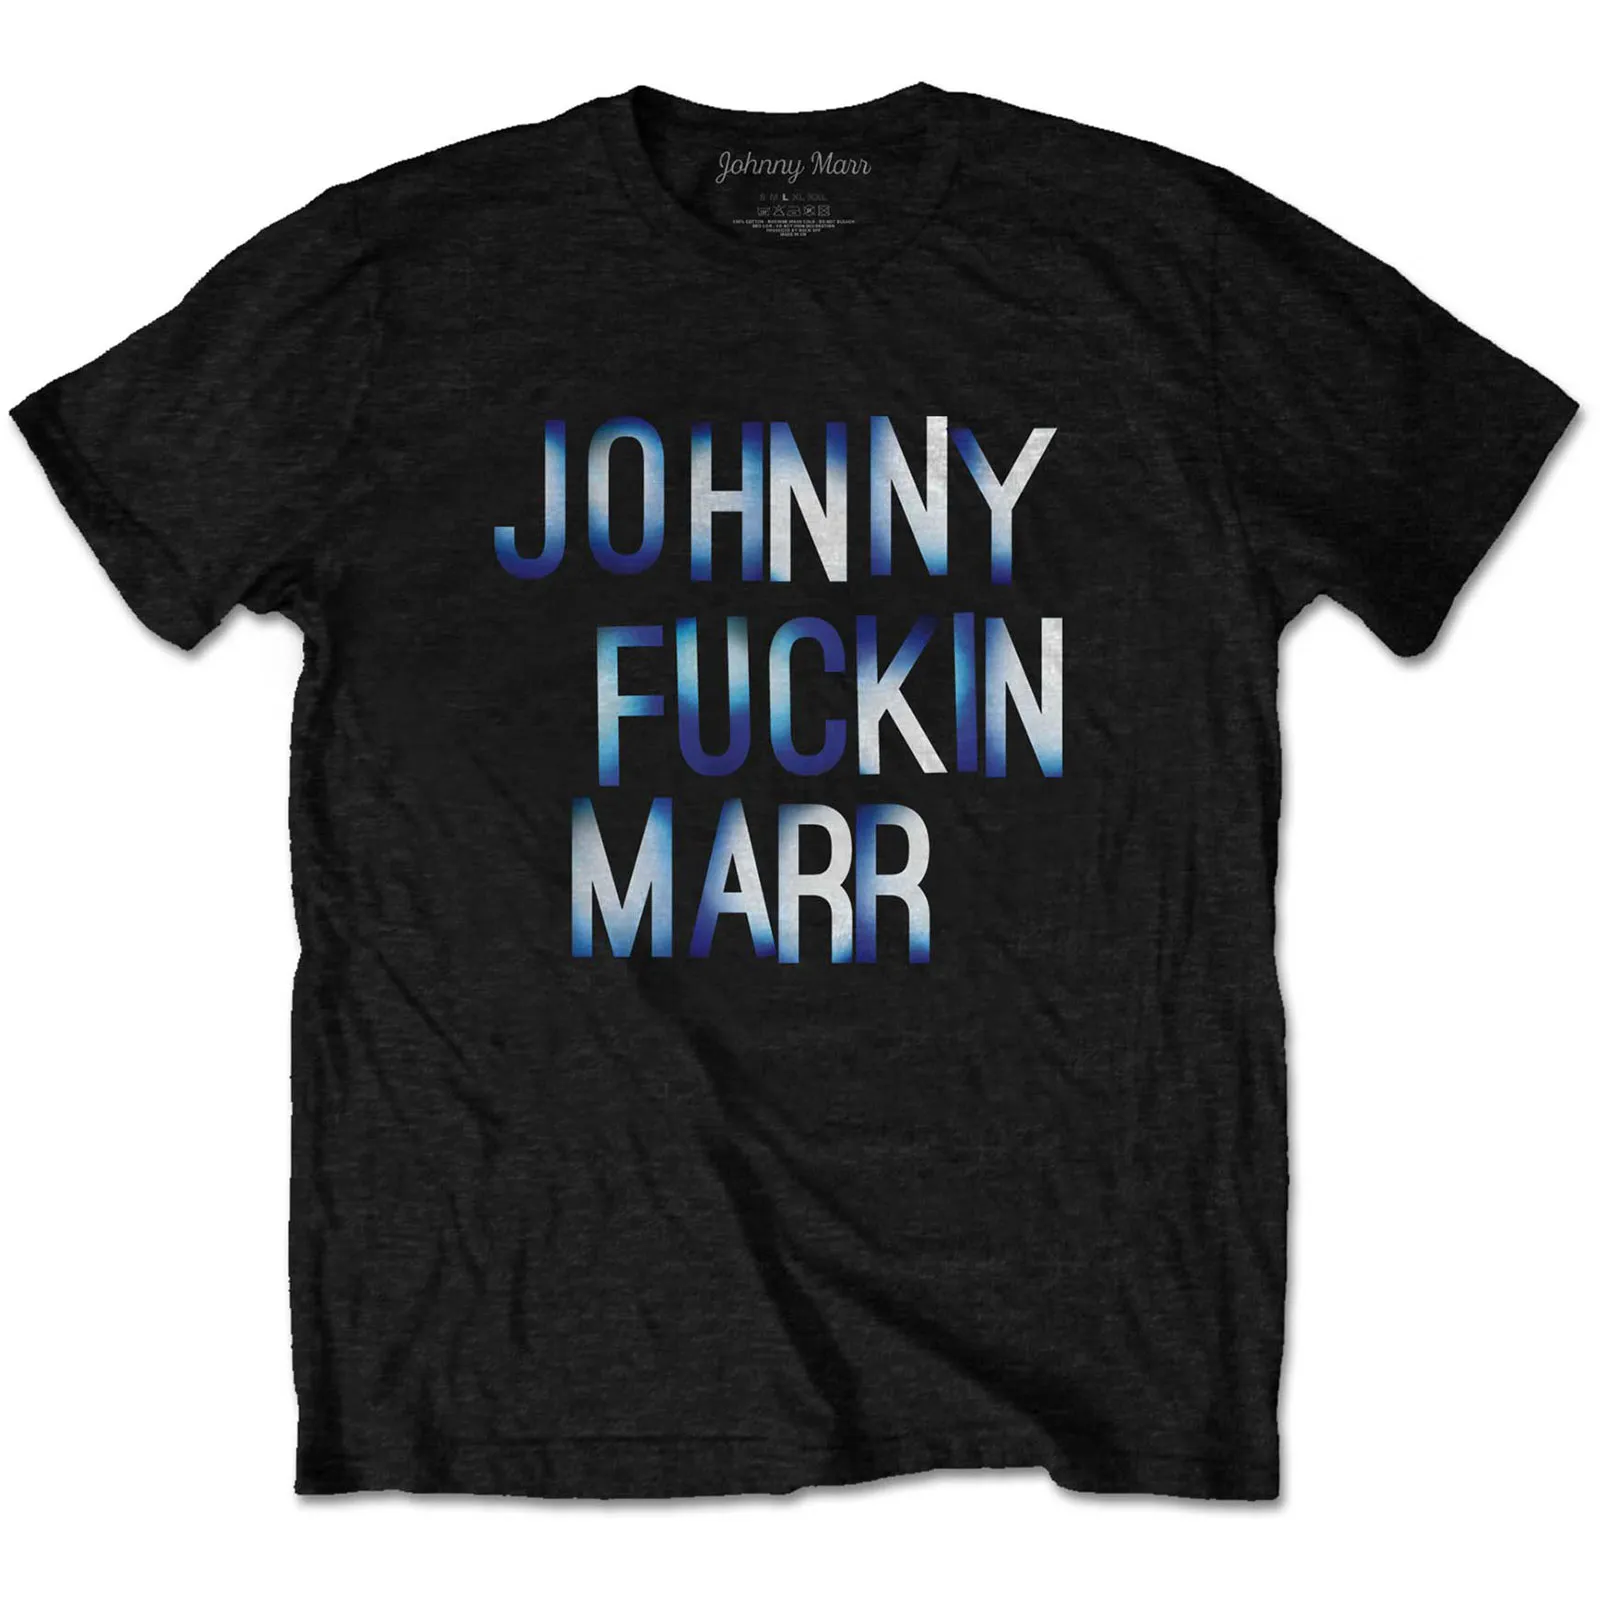 Johnny Marr - Unisex T-Shirt JFM artwork